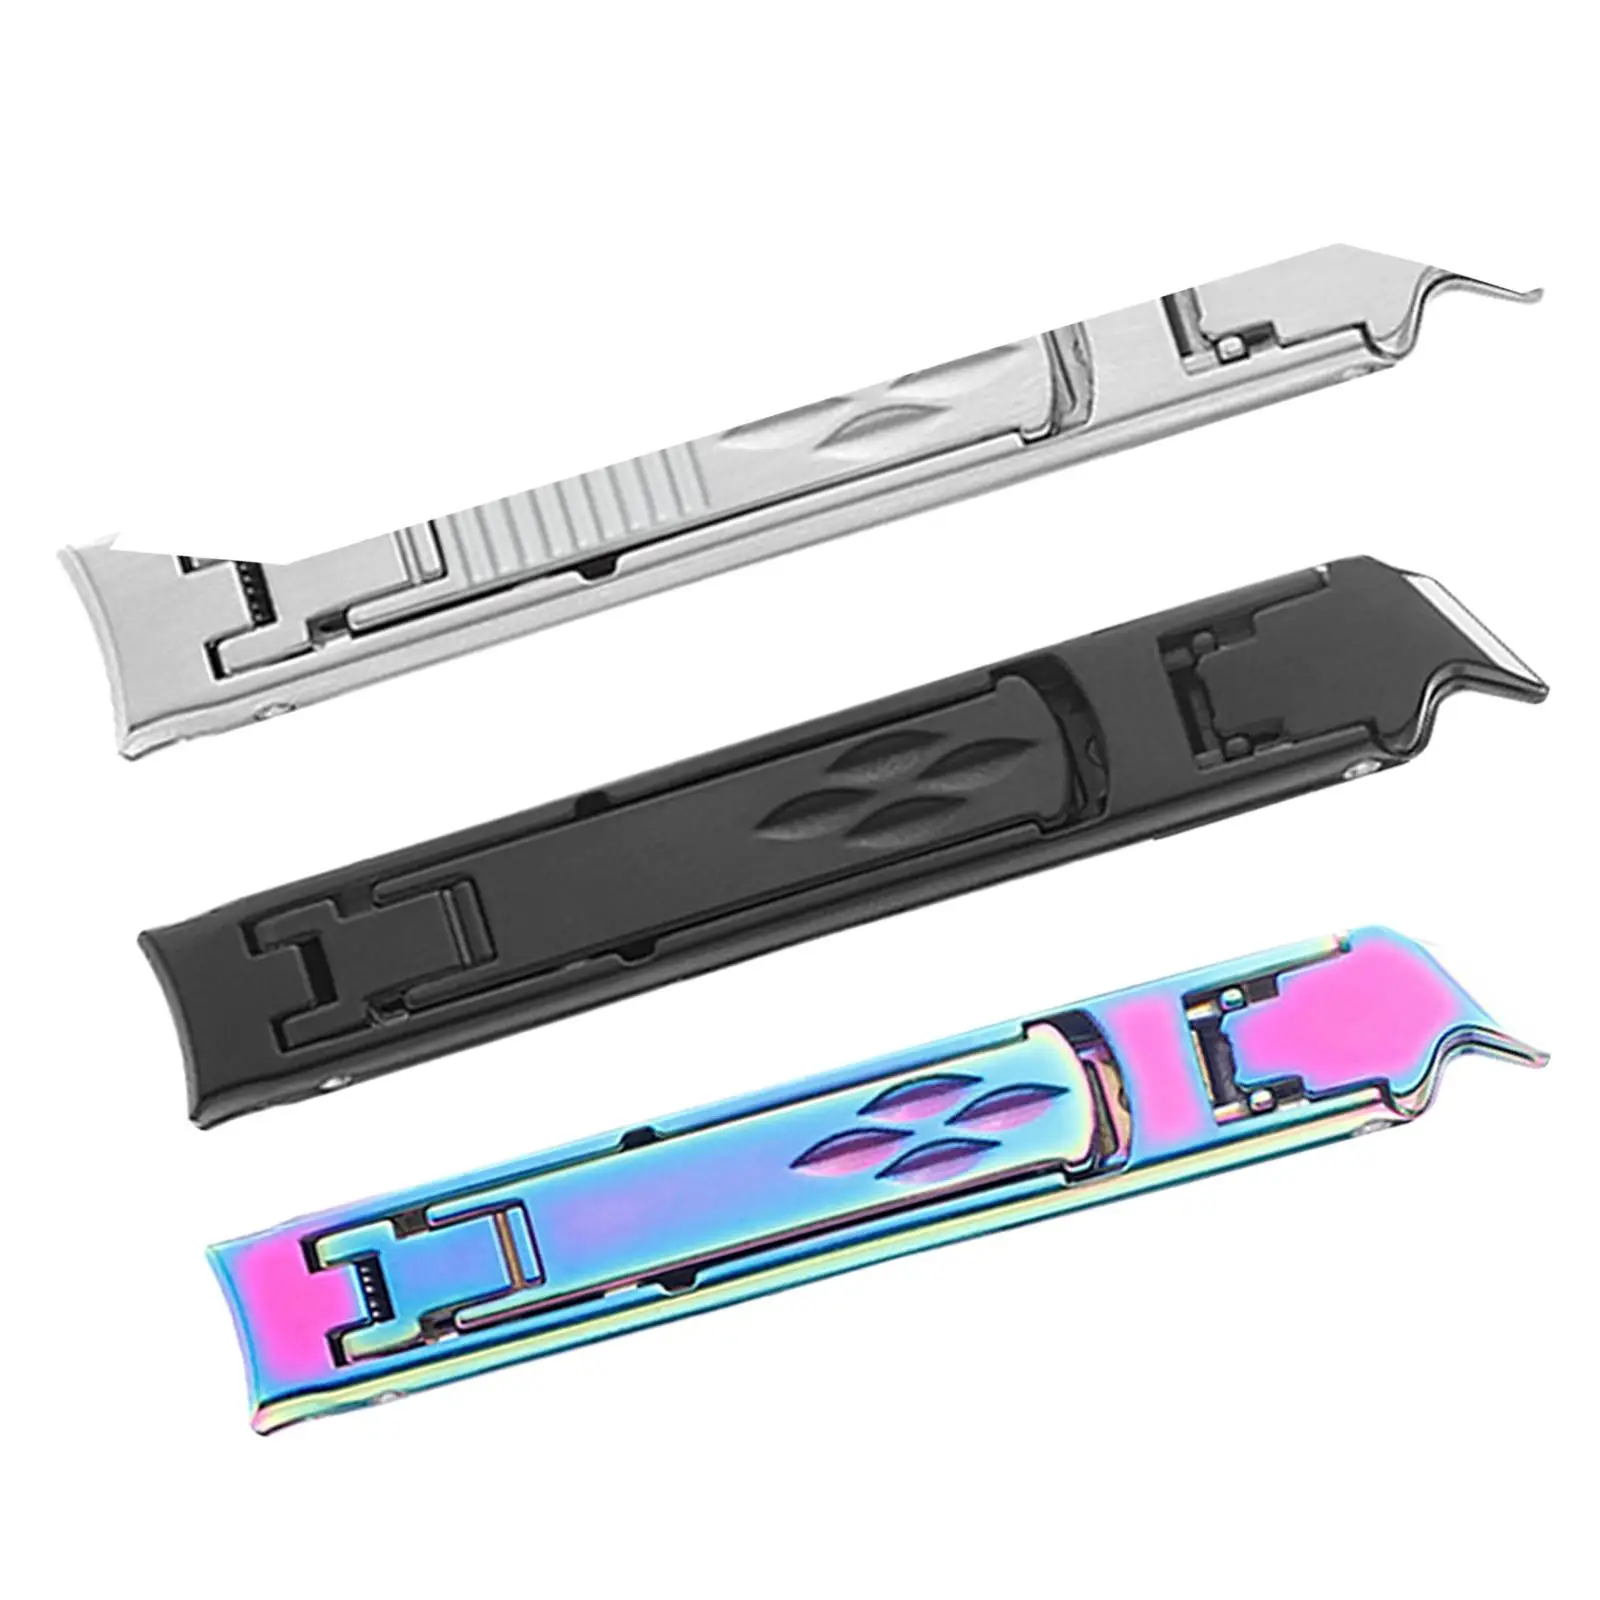 Nail Cutter Double-Headed Pliers Premium Folding Portable for Fingernail